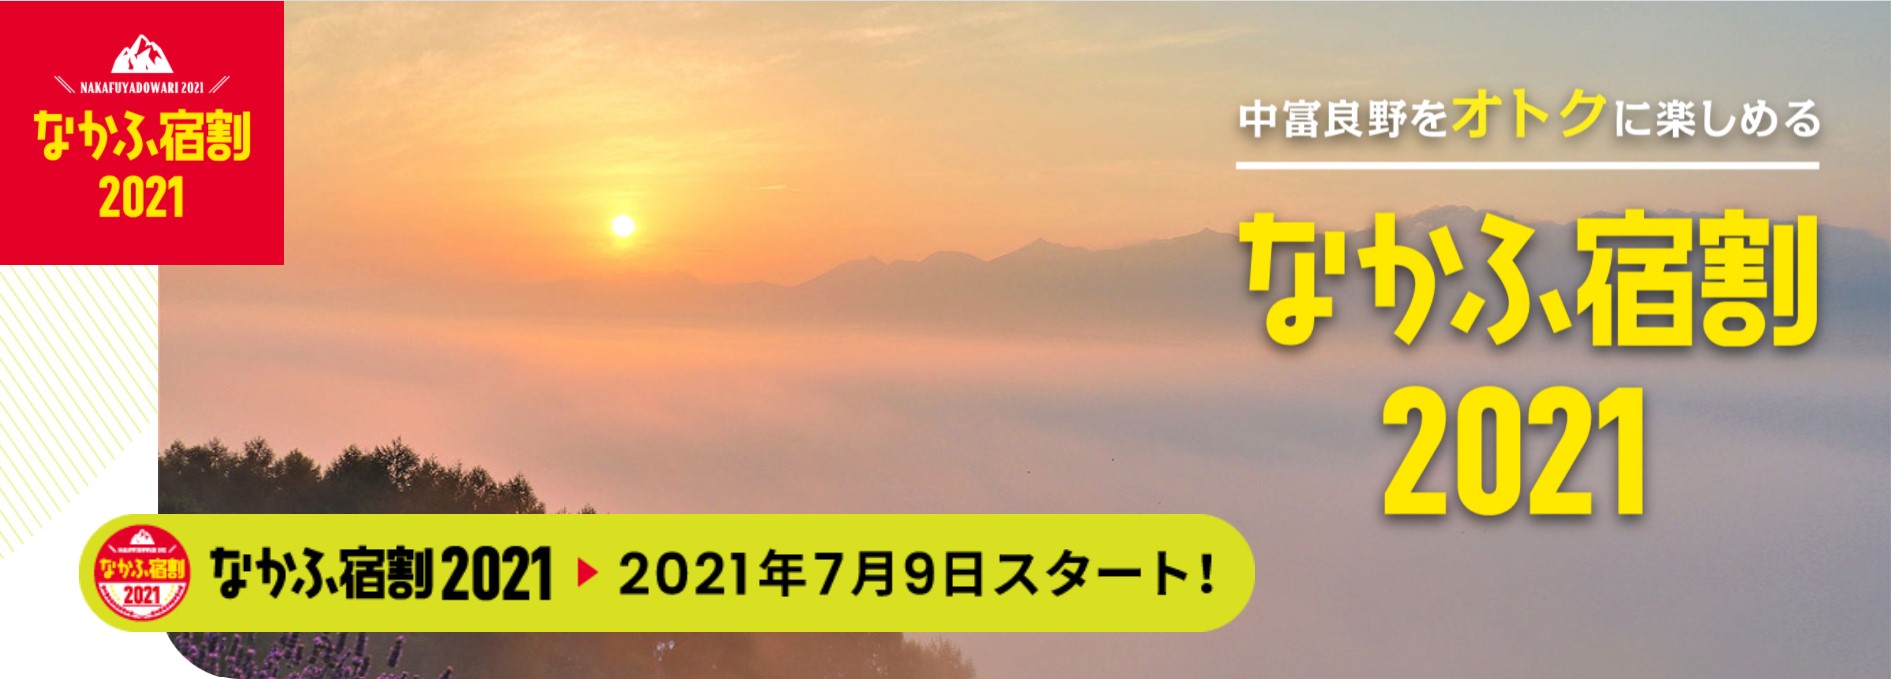 GoToトラベル北海道自治体旅行キャンペーン